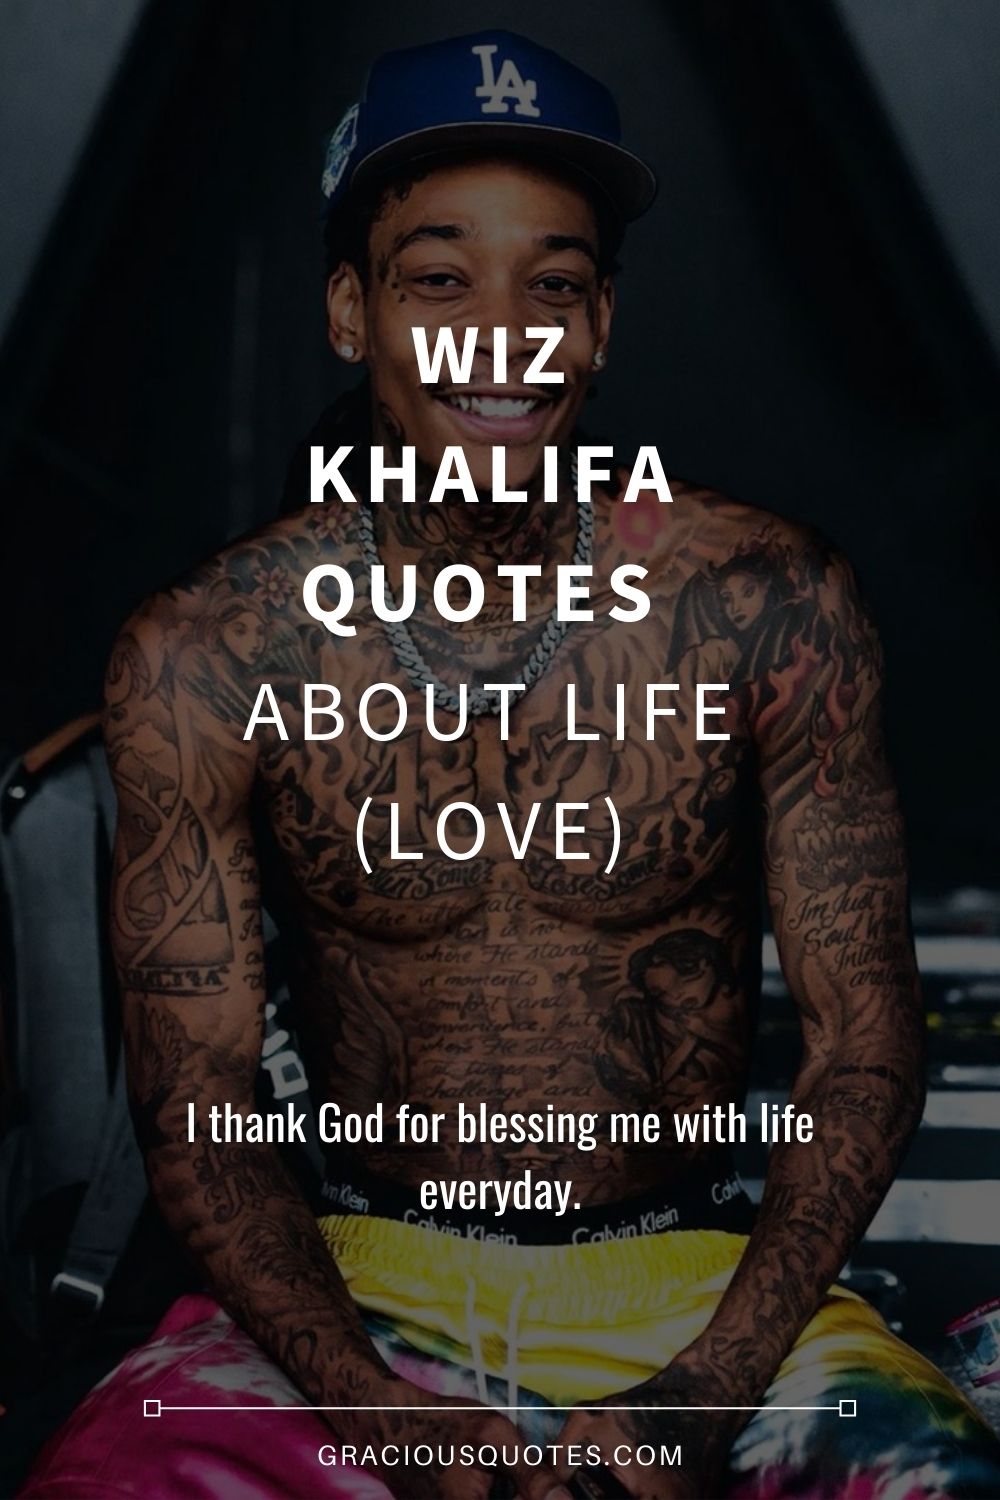 10 Best Wiz Khalifa Quotes